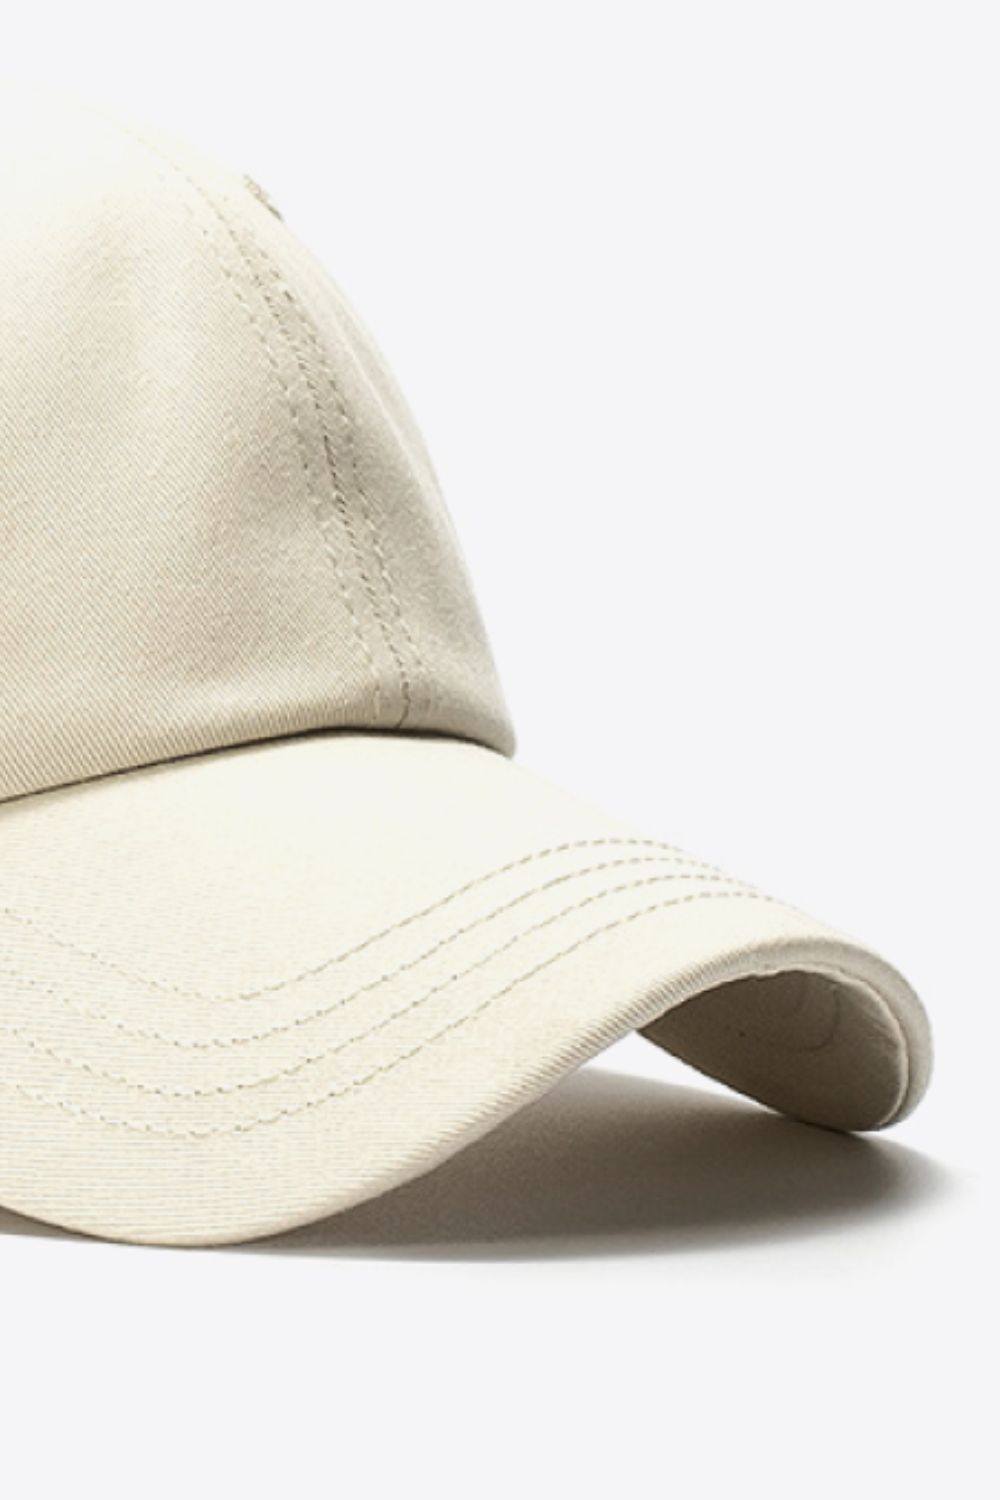 Cotton Baseball Hat cream white brim